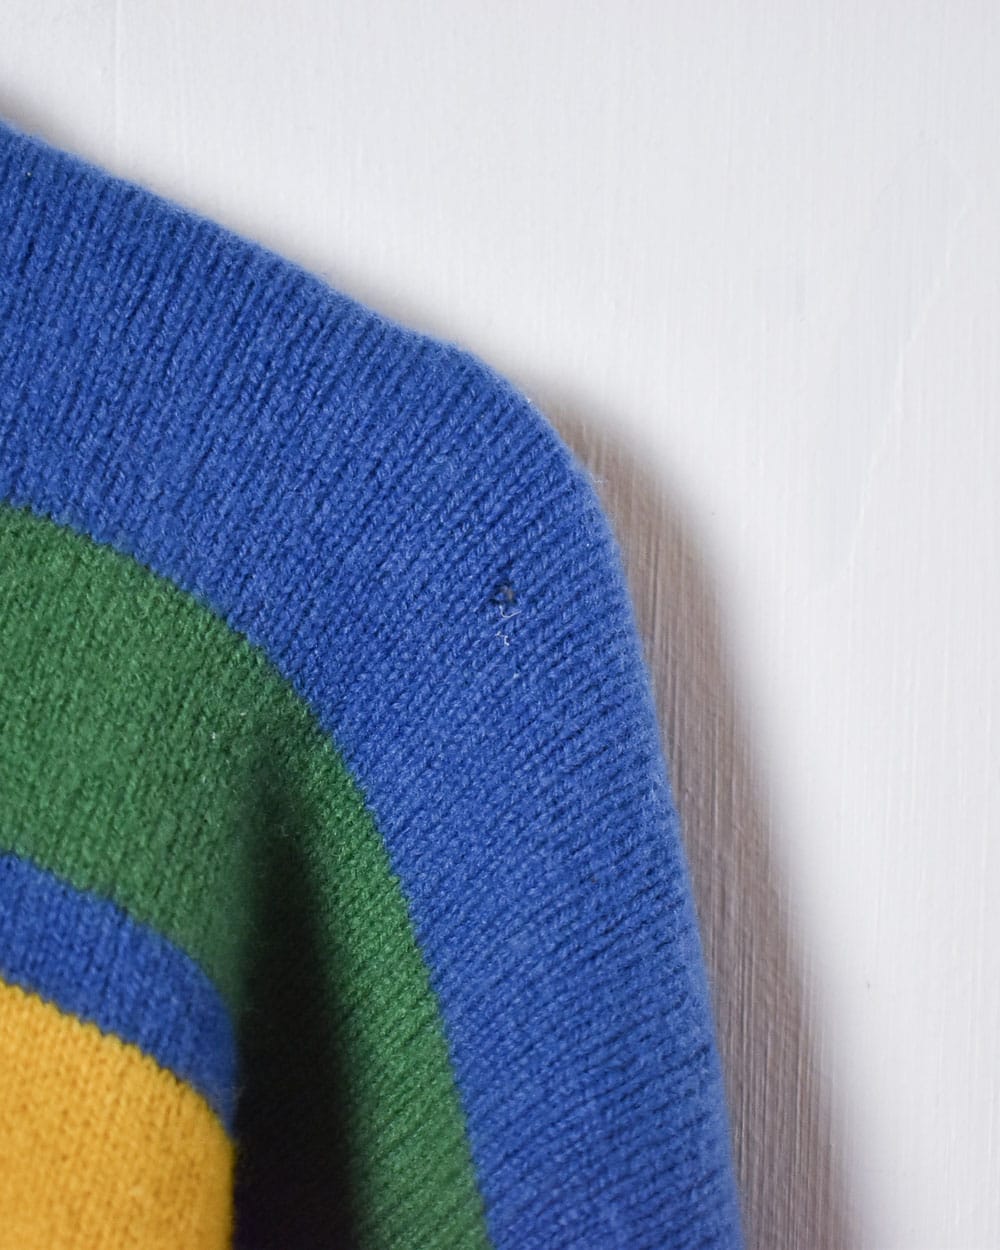 Blue Paca Patterned Knitted Sweatshirt - Medium